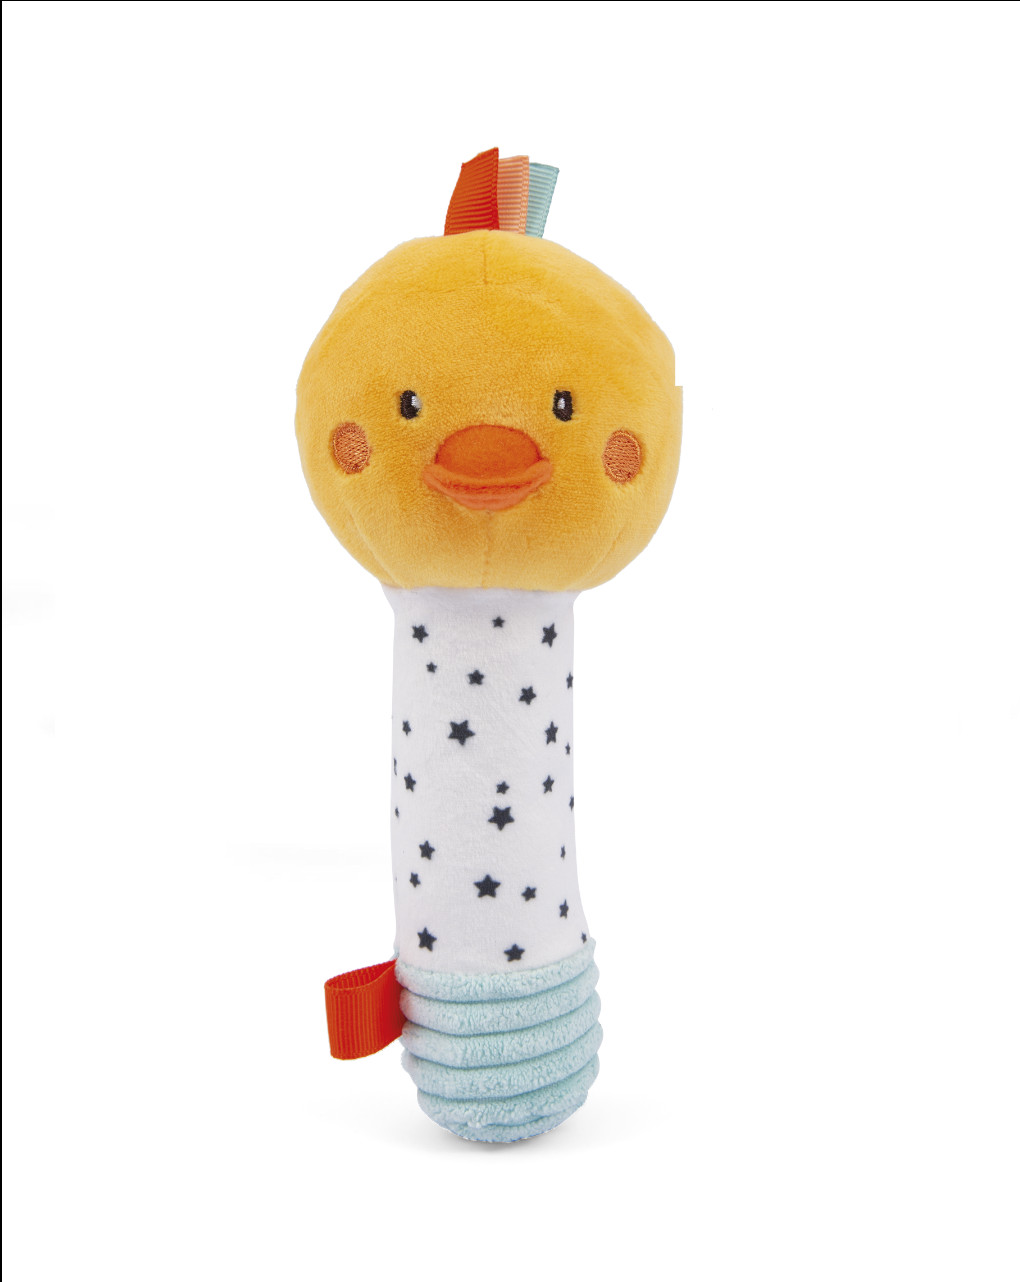 Ducky duck squeaker sonajero - peluches - Baby Smile